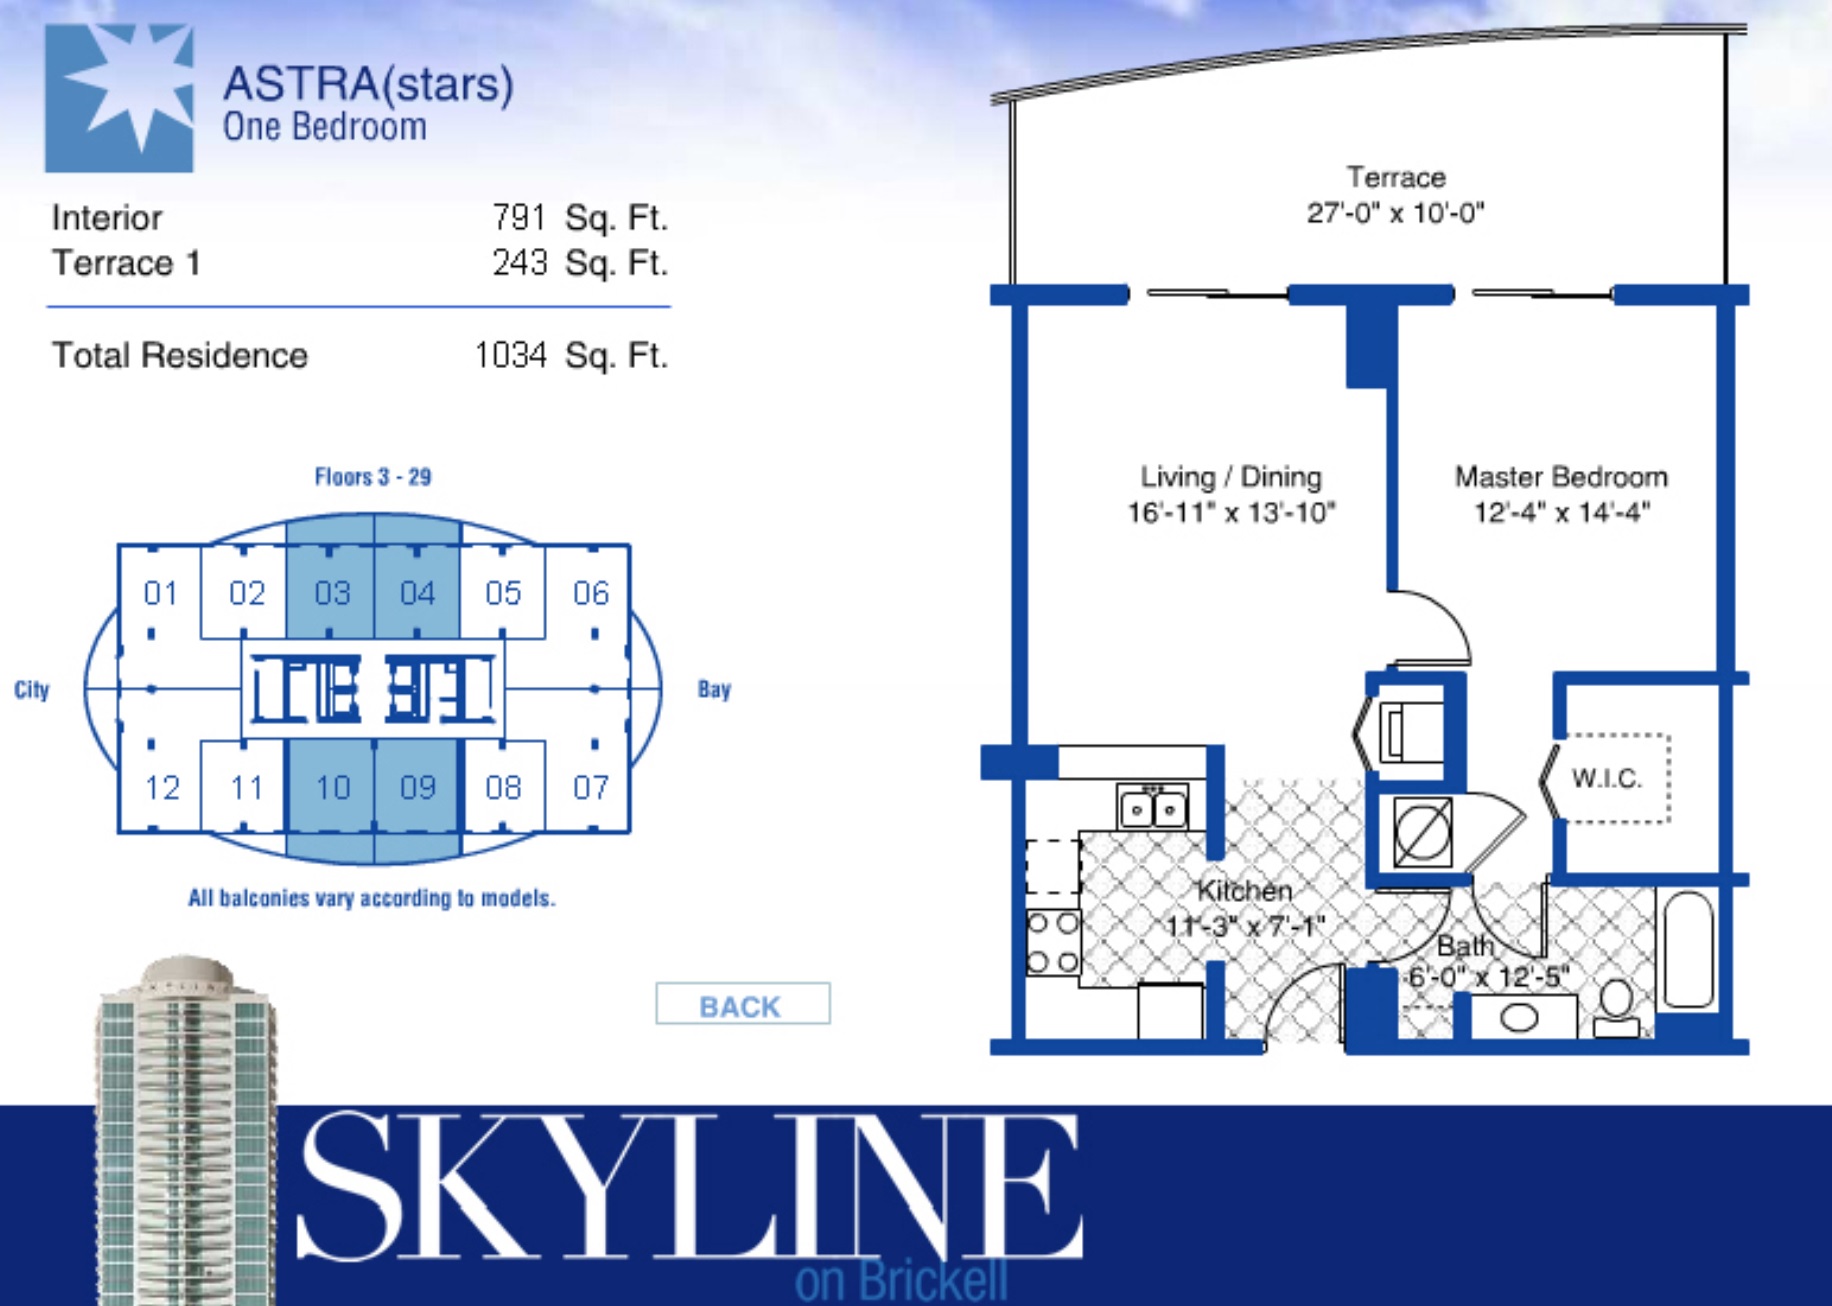 Skyline Brickell Astra